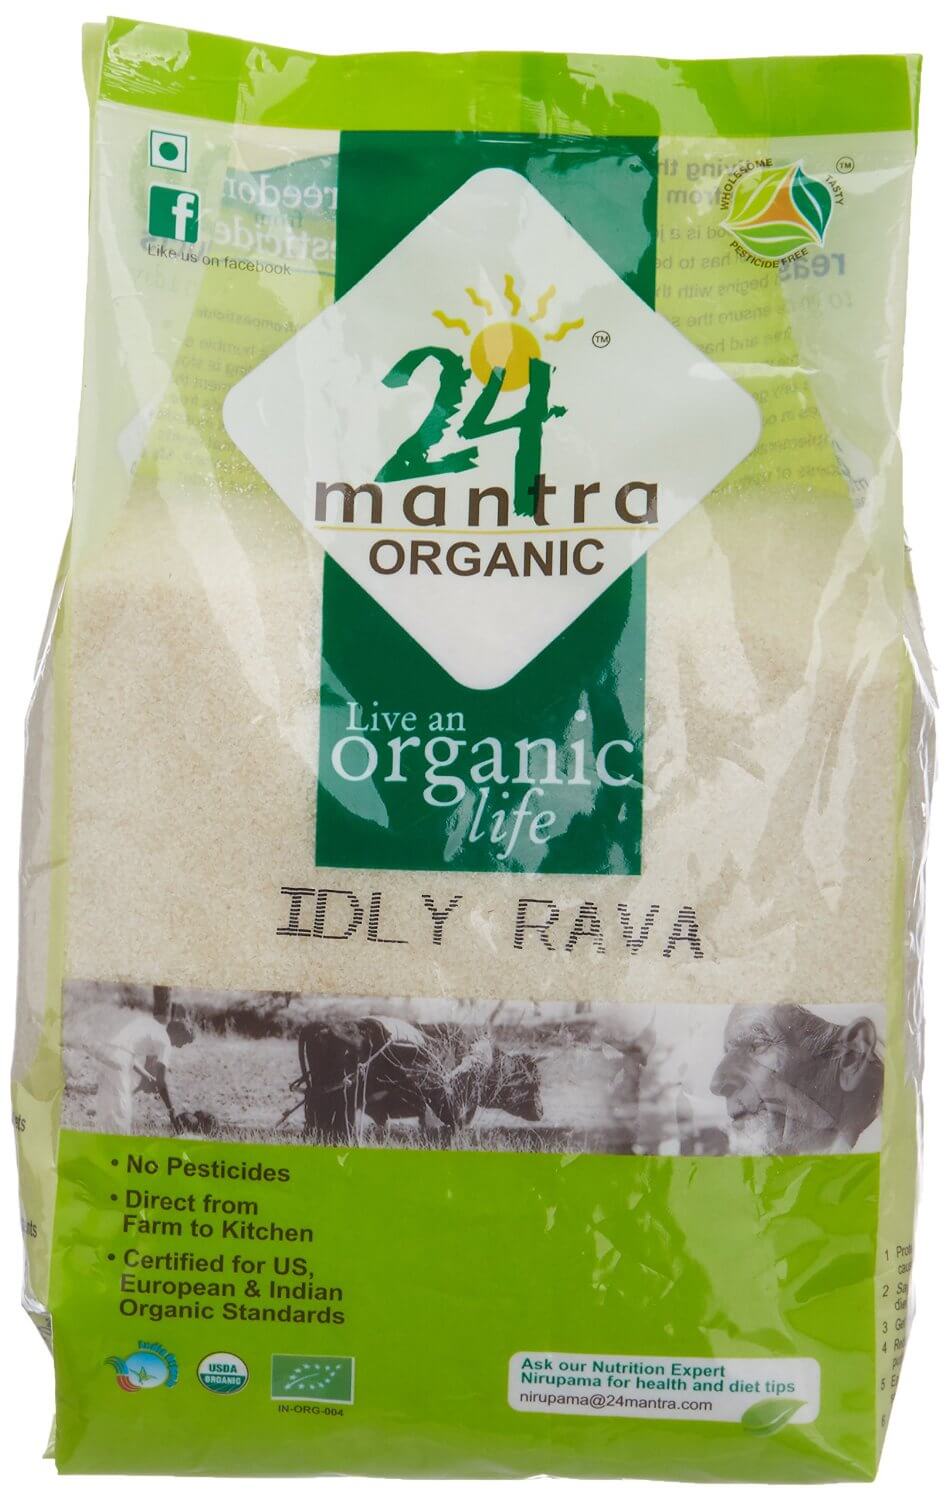 24 Mantra Organic Idly Rava 500g VizagShop.com